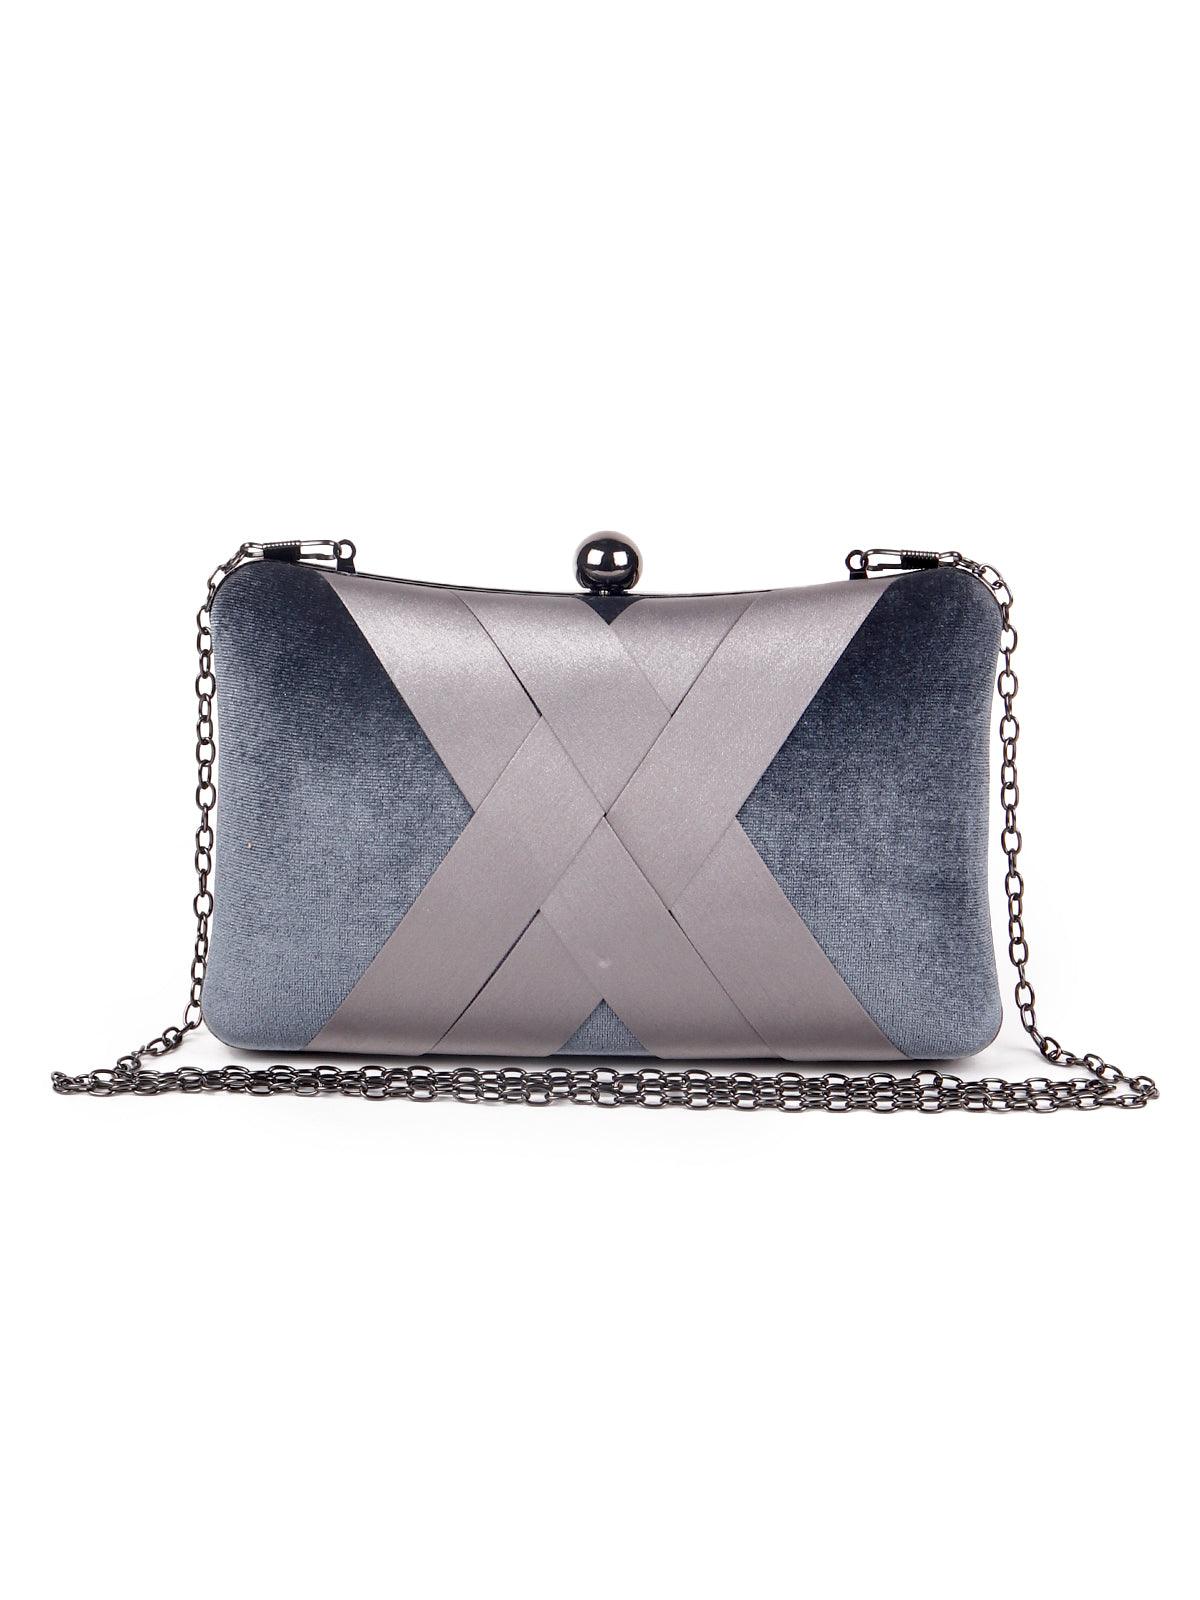 Classic grey box sling bag for women - Odette